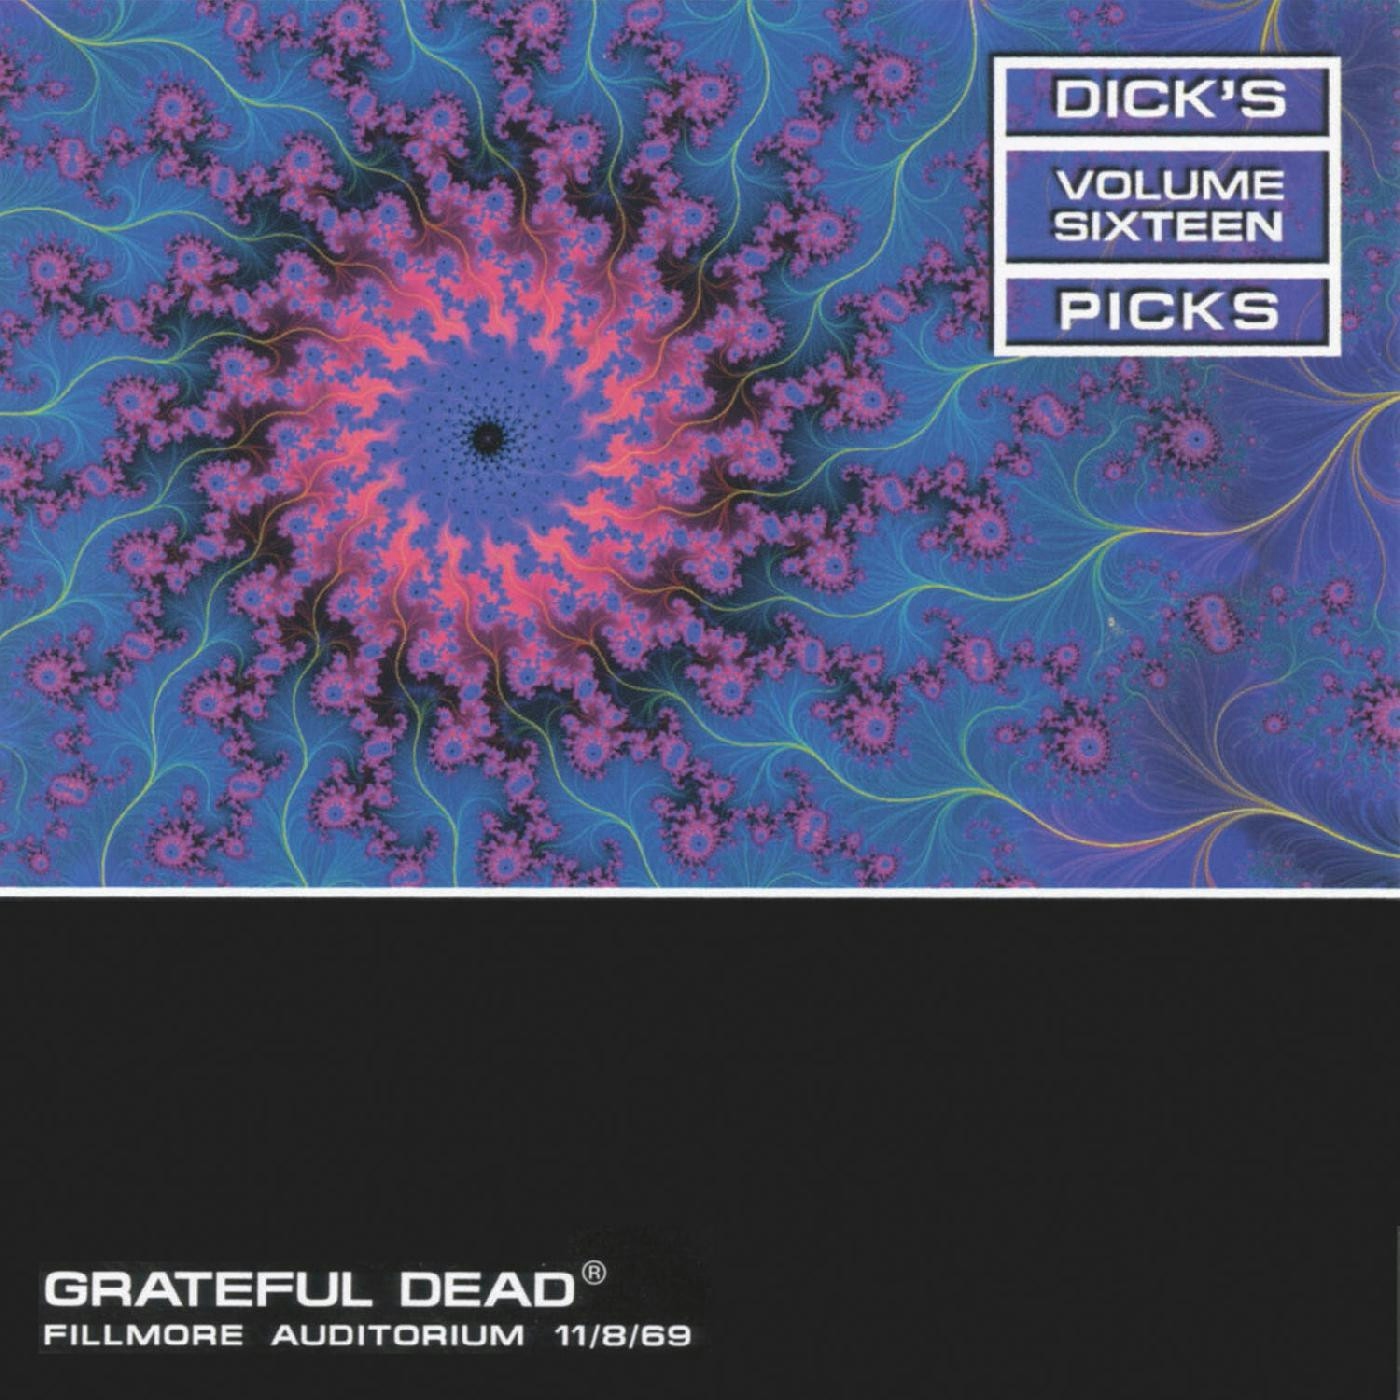 Album artwork for Dick's Picks Vol. 16-Fillmore Auditorium, San Francisco, CA 11/8/69 by Grateful Dead